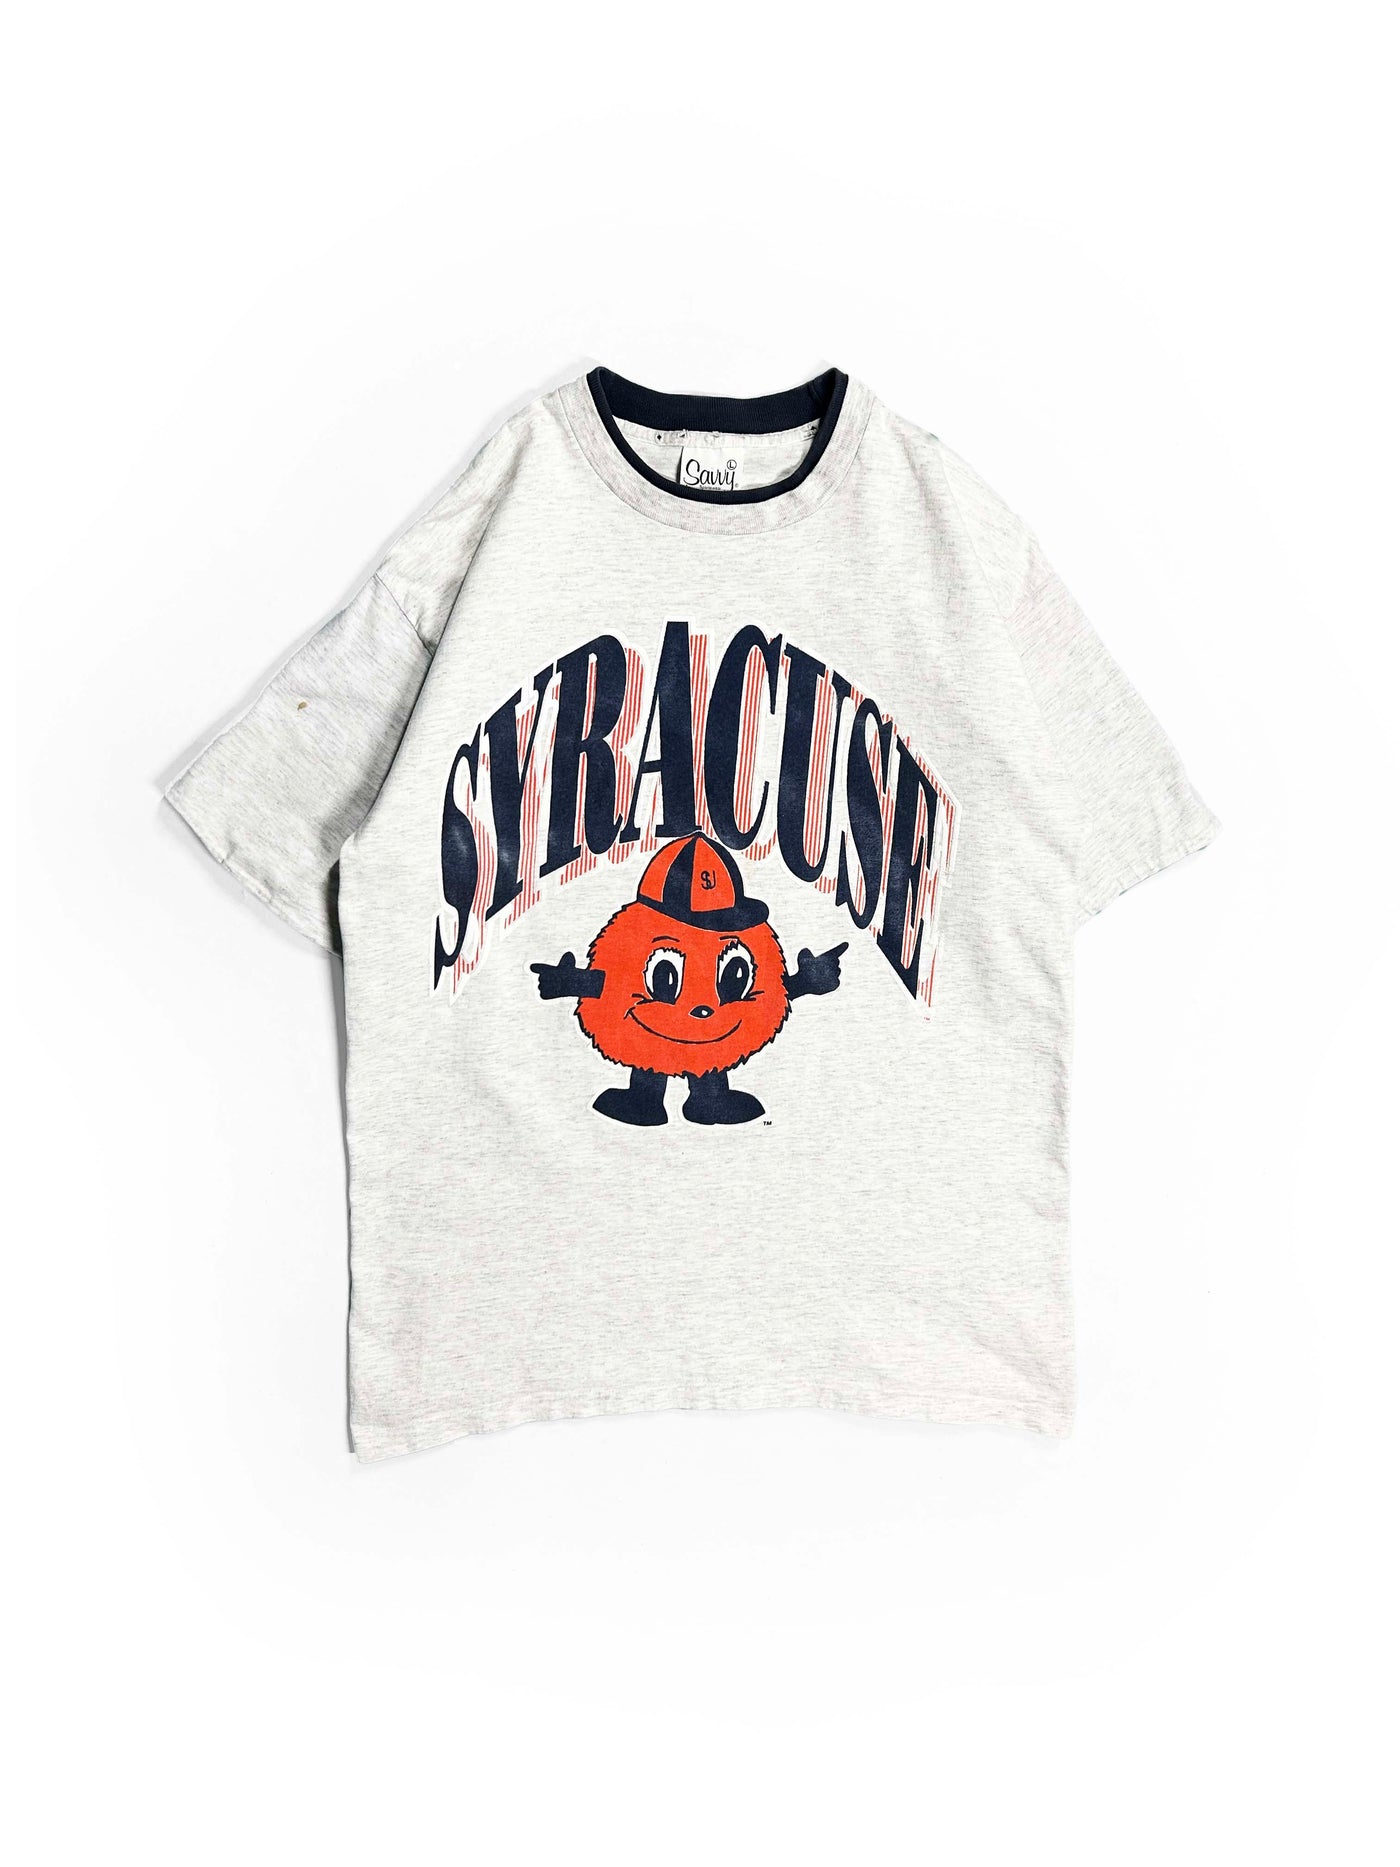 Vintage 90s Syracuse T-Shirt